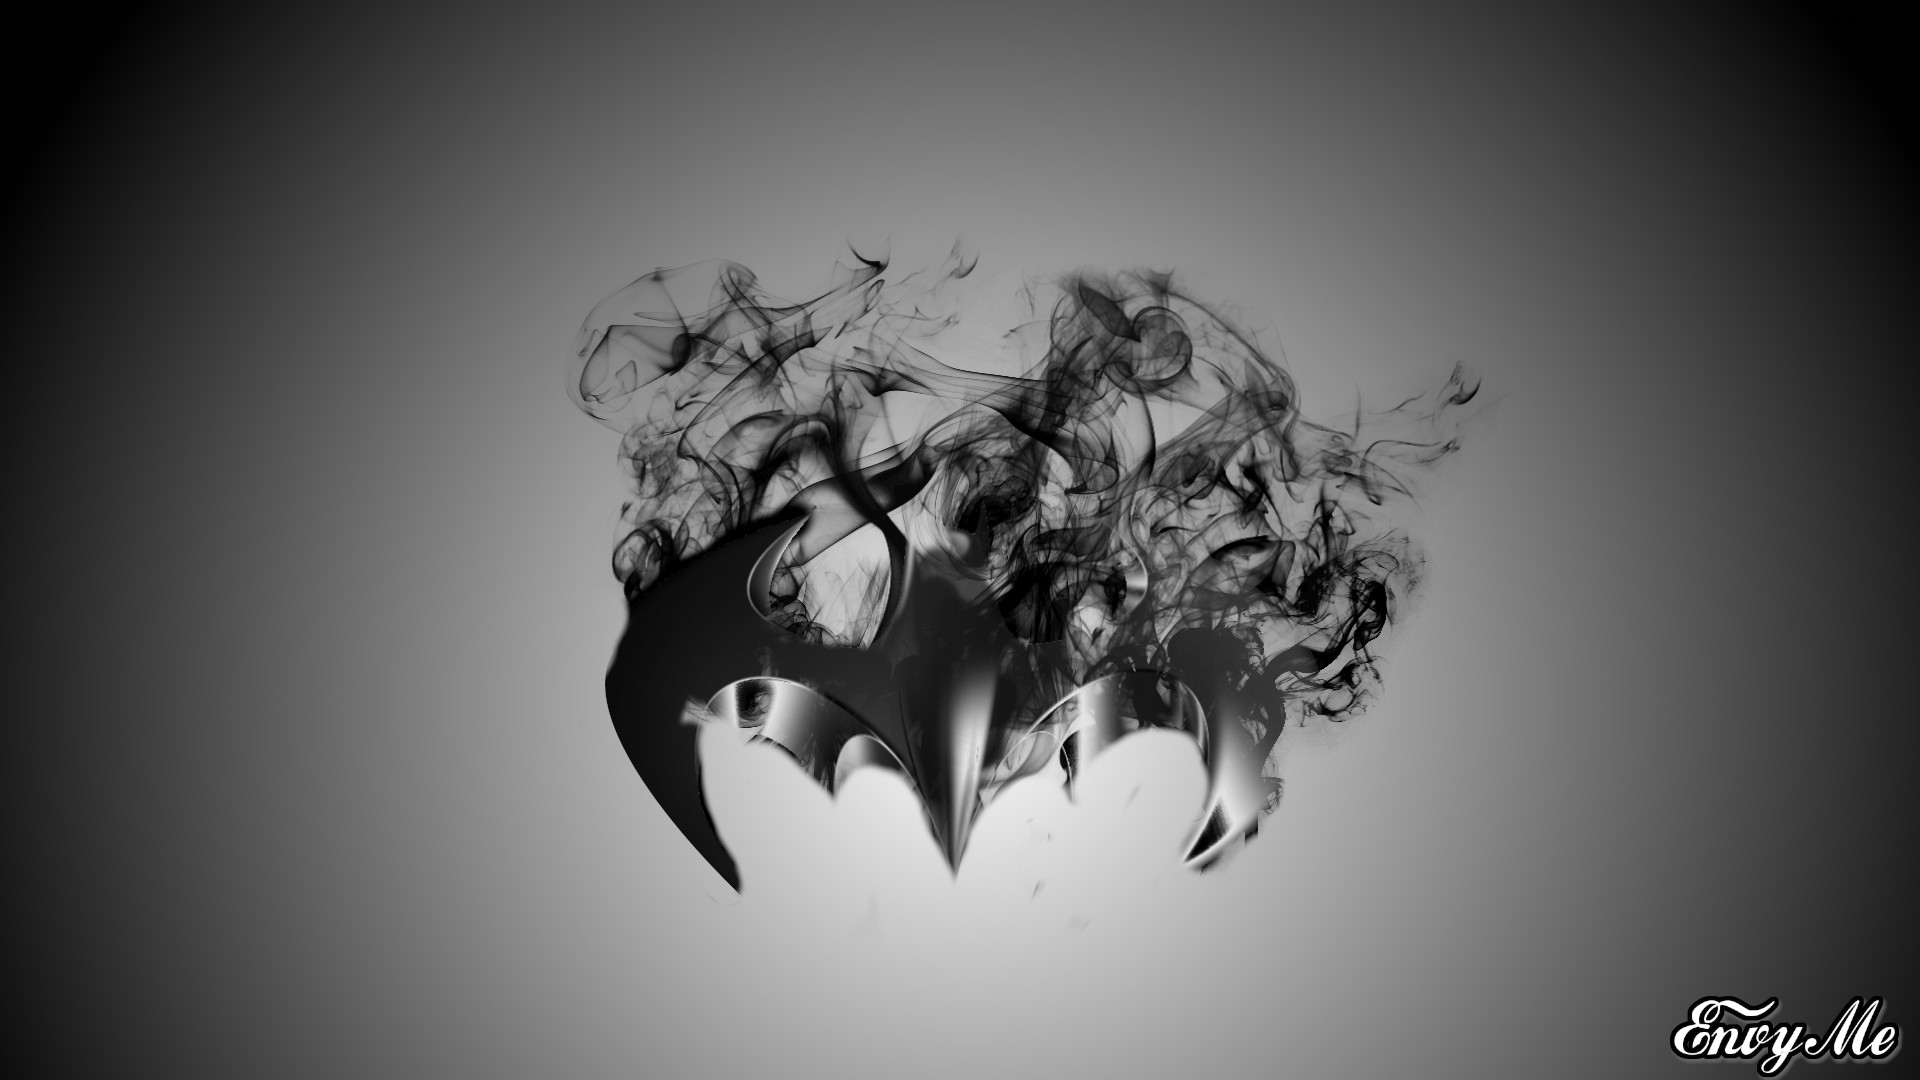 Batman Logo 1920x1080